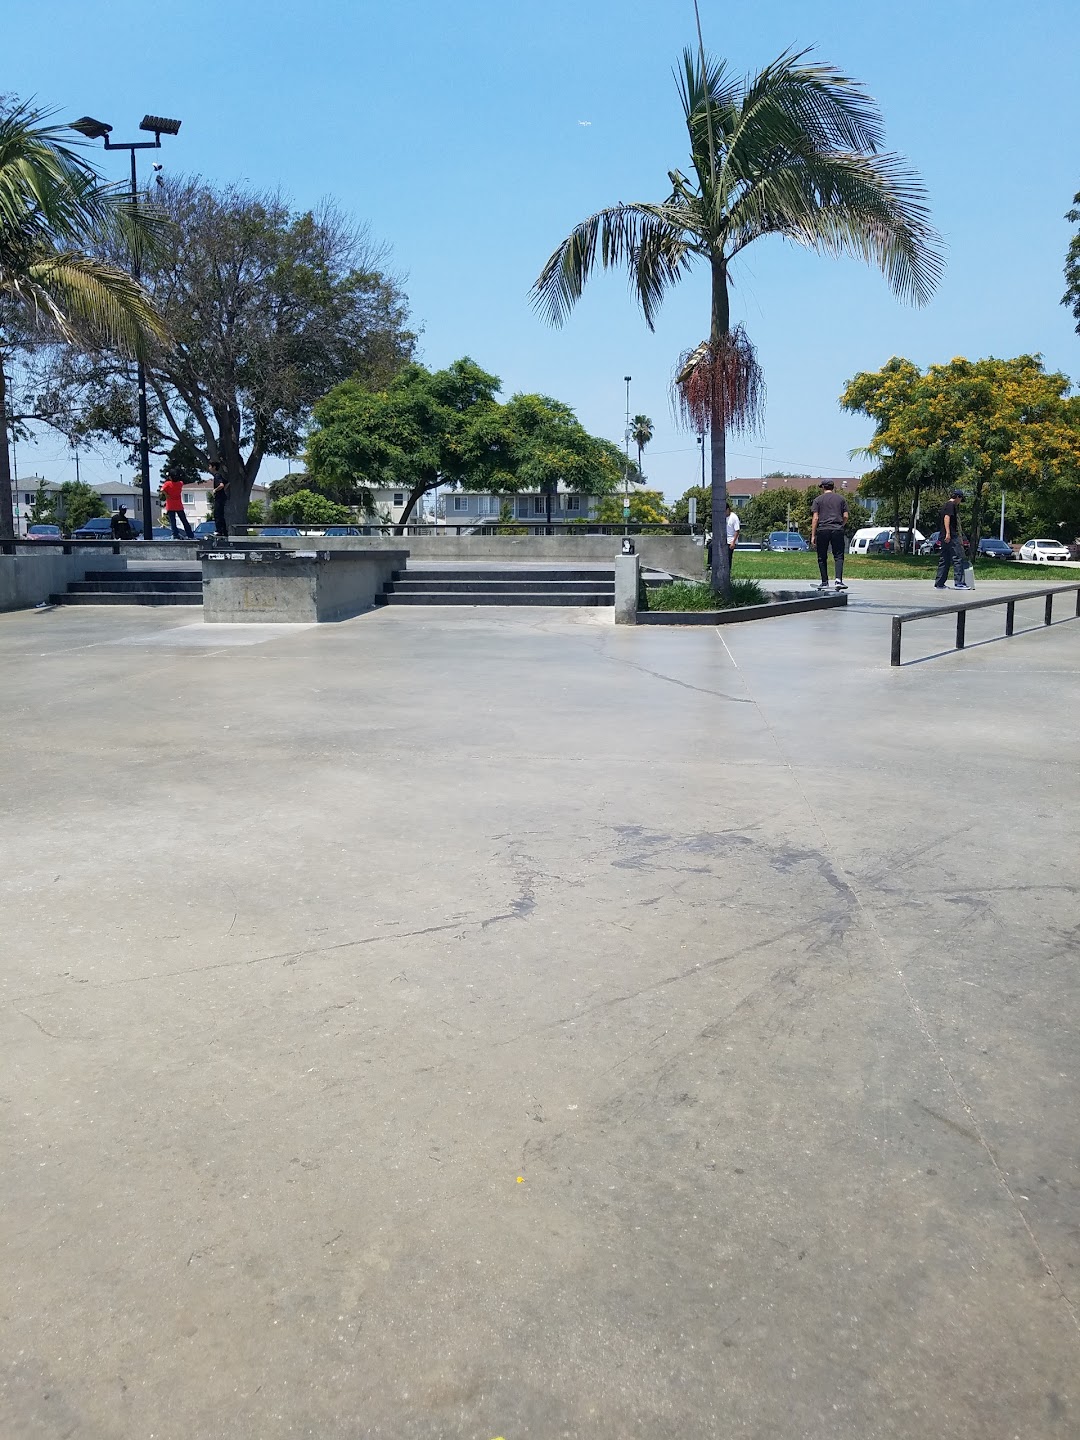 Westchester Skate Plaza